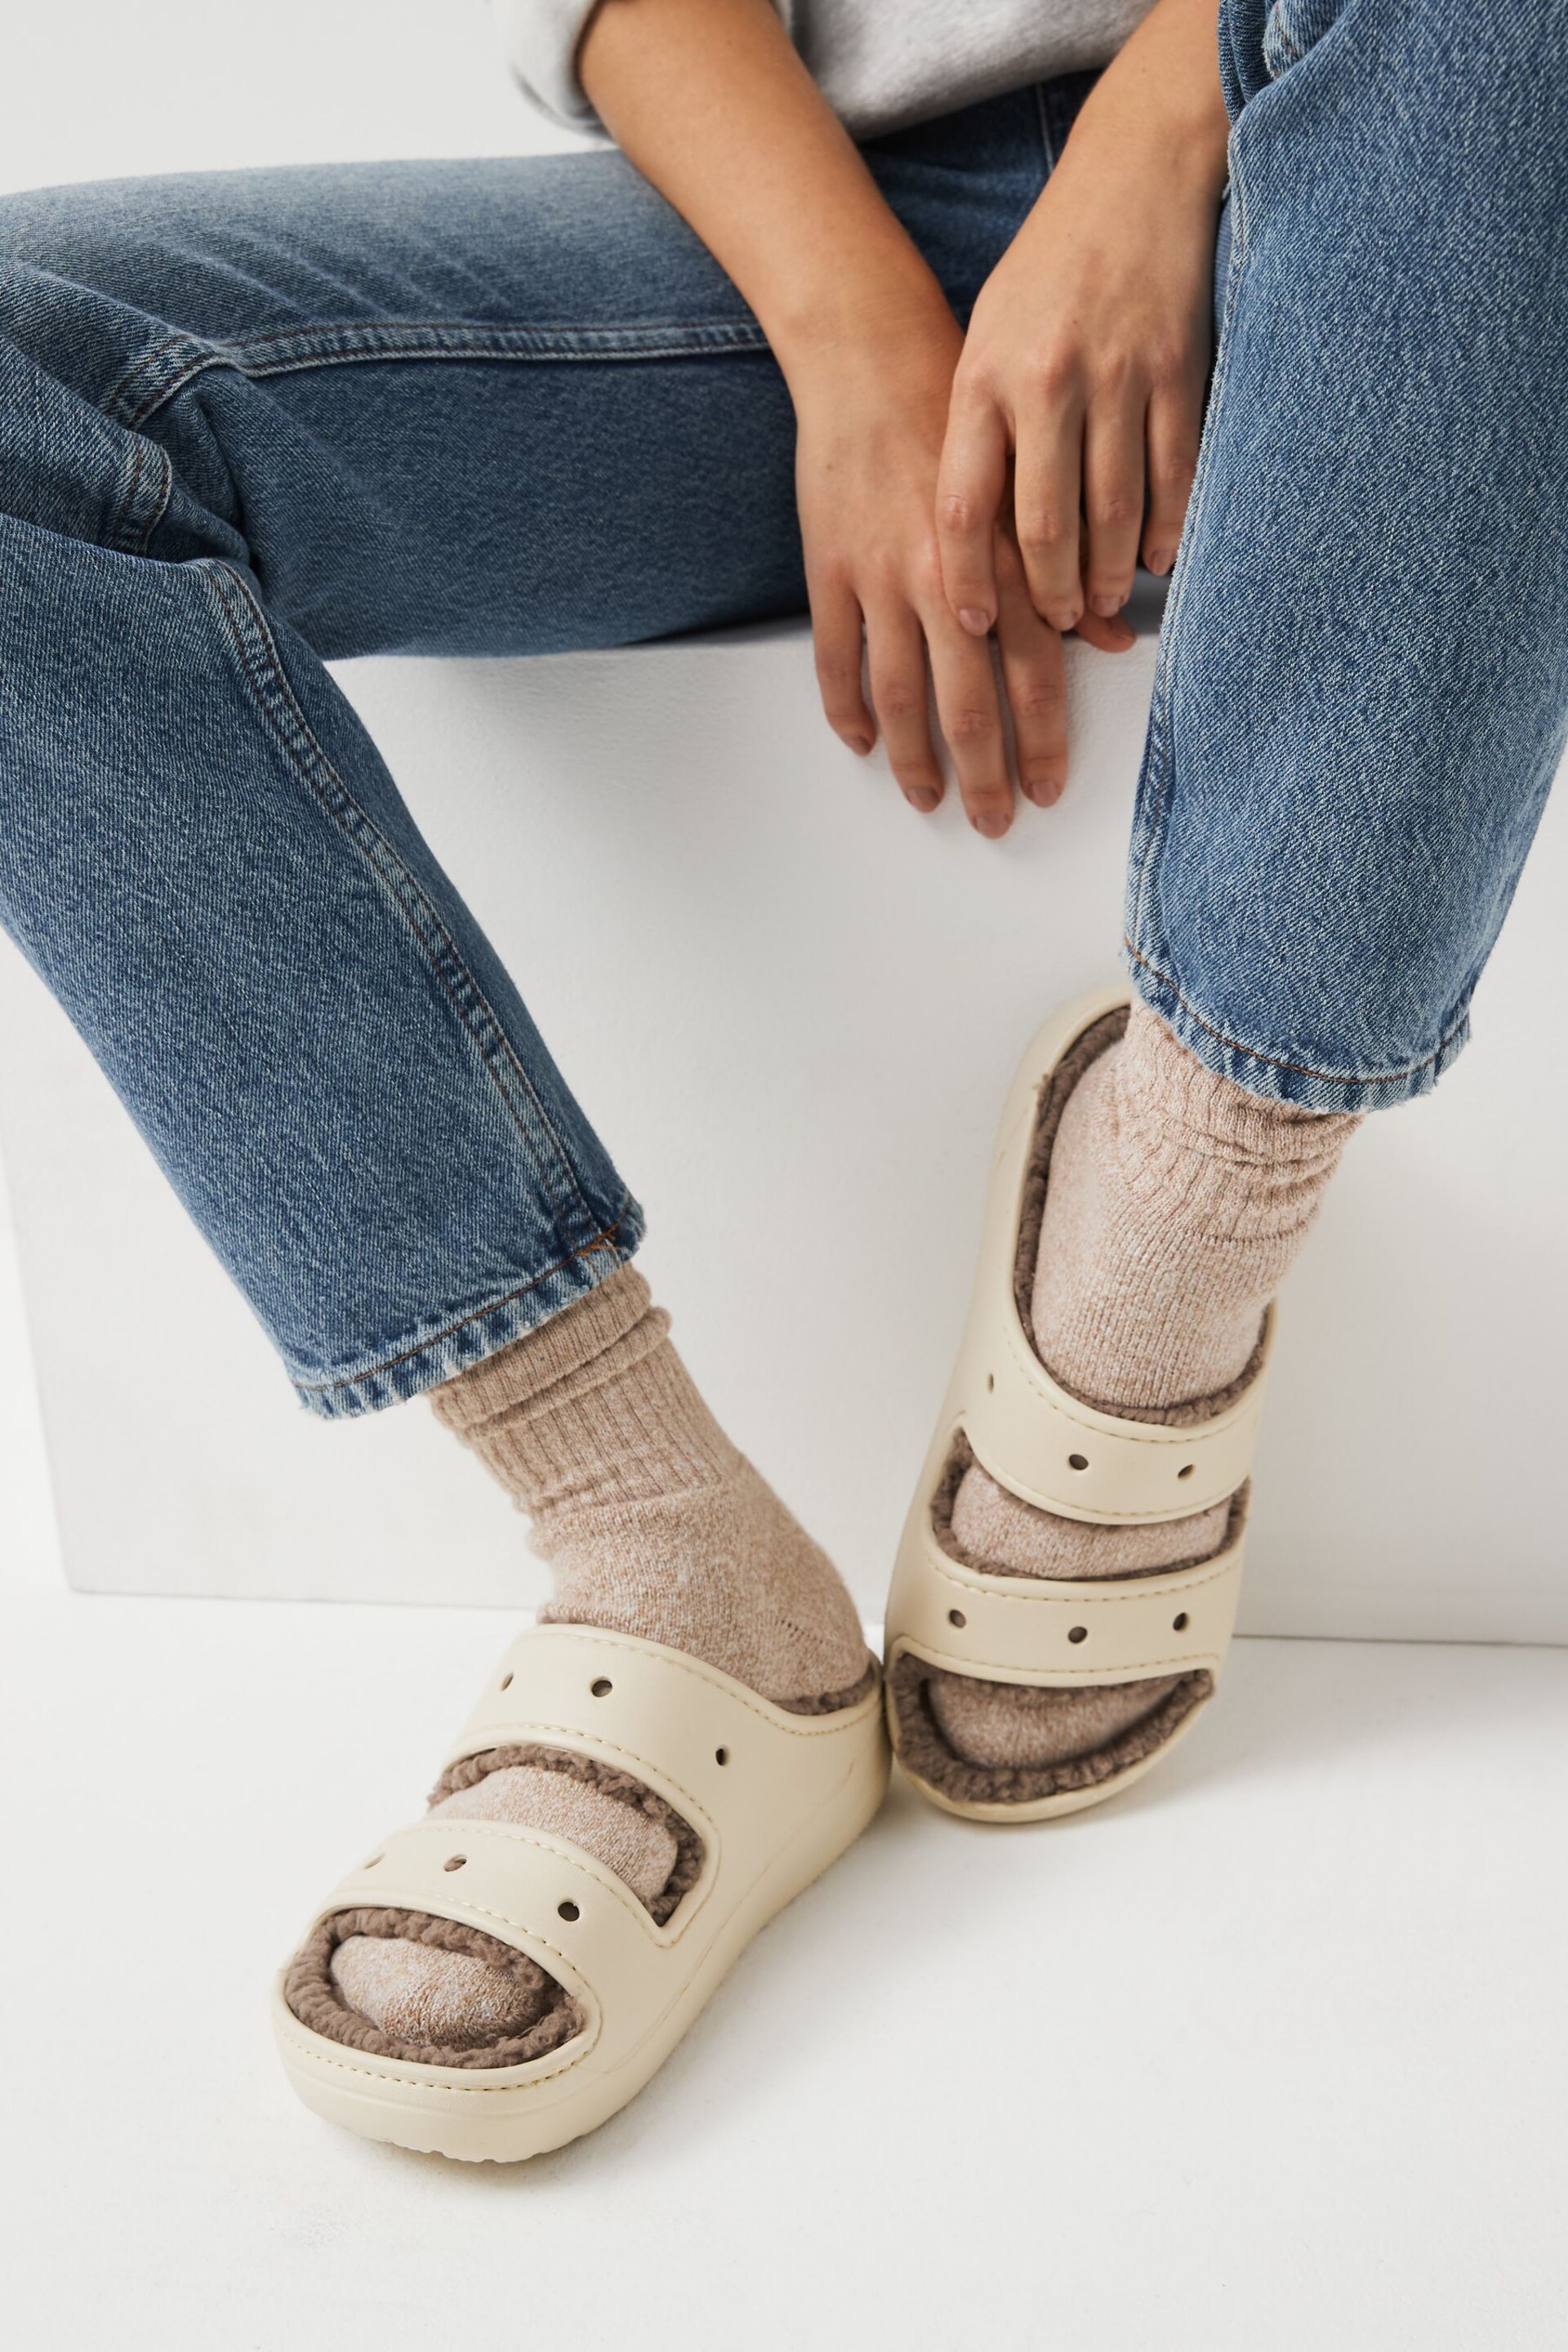 Crocs Classic Faux Fur Lined Cozzzy Sandals - Image 1 of 5